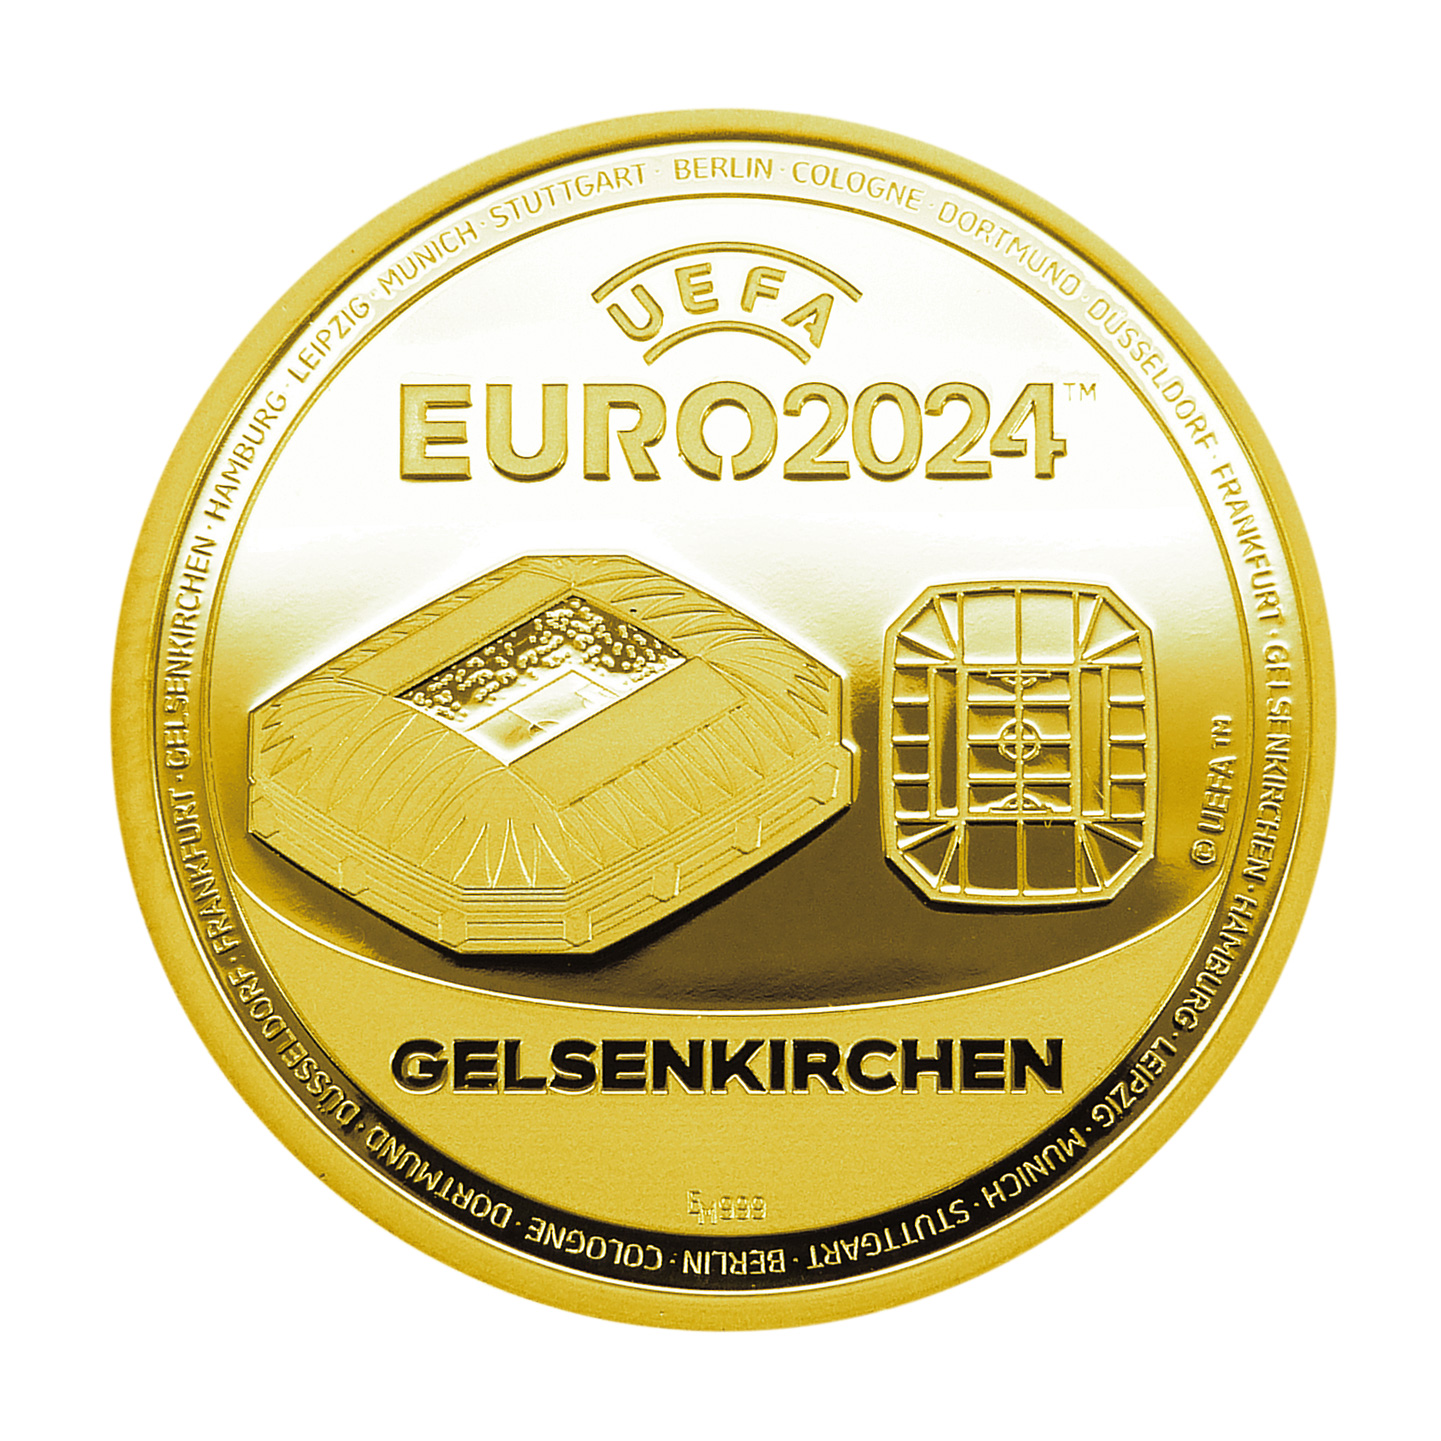 UEFA EURO 2024 Gelsenkirchen - gold